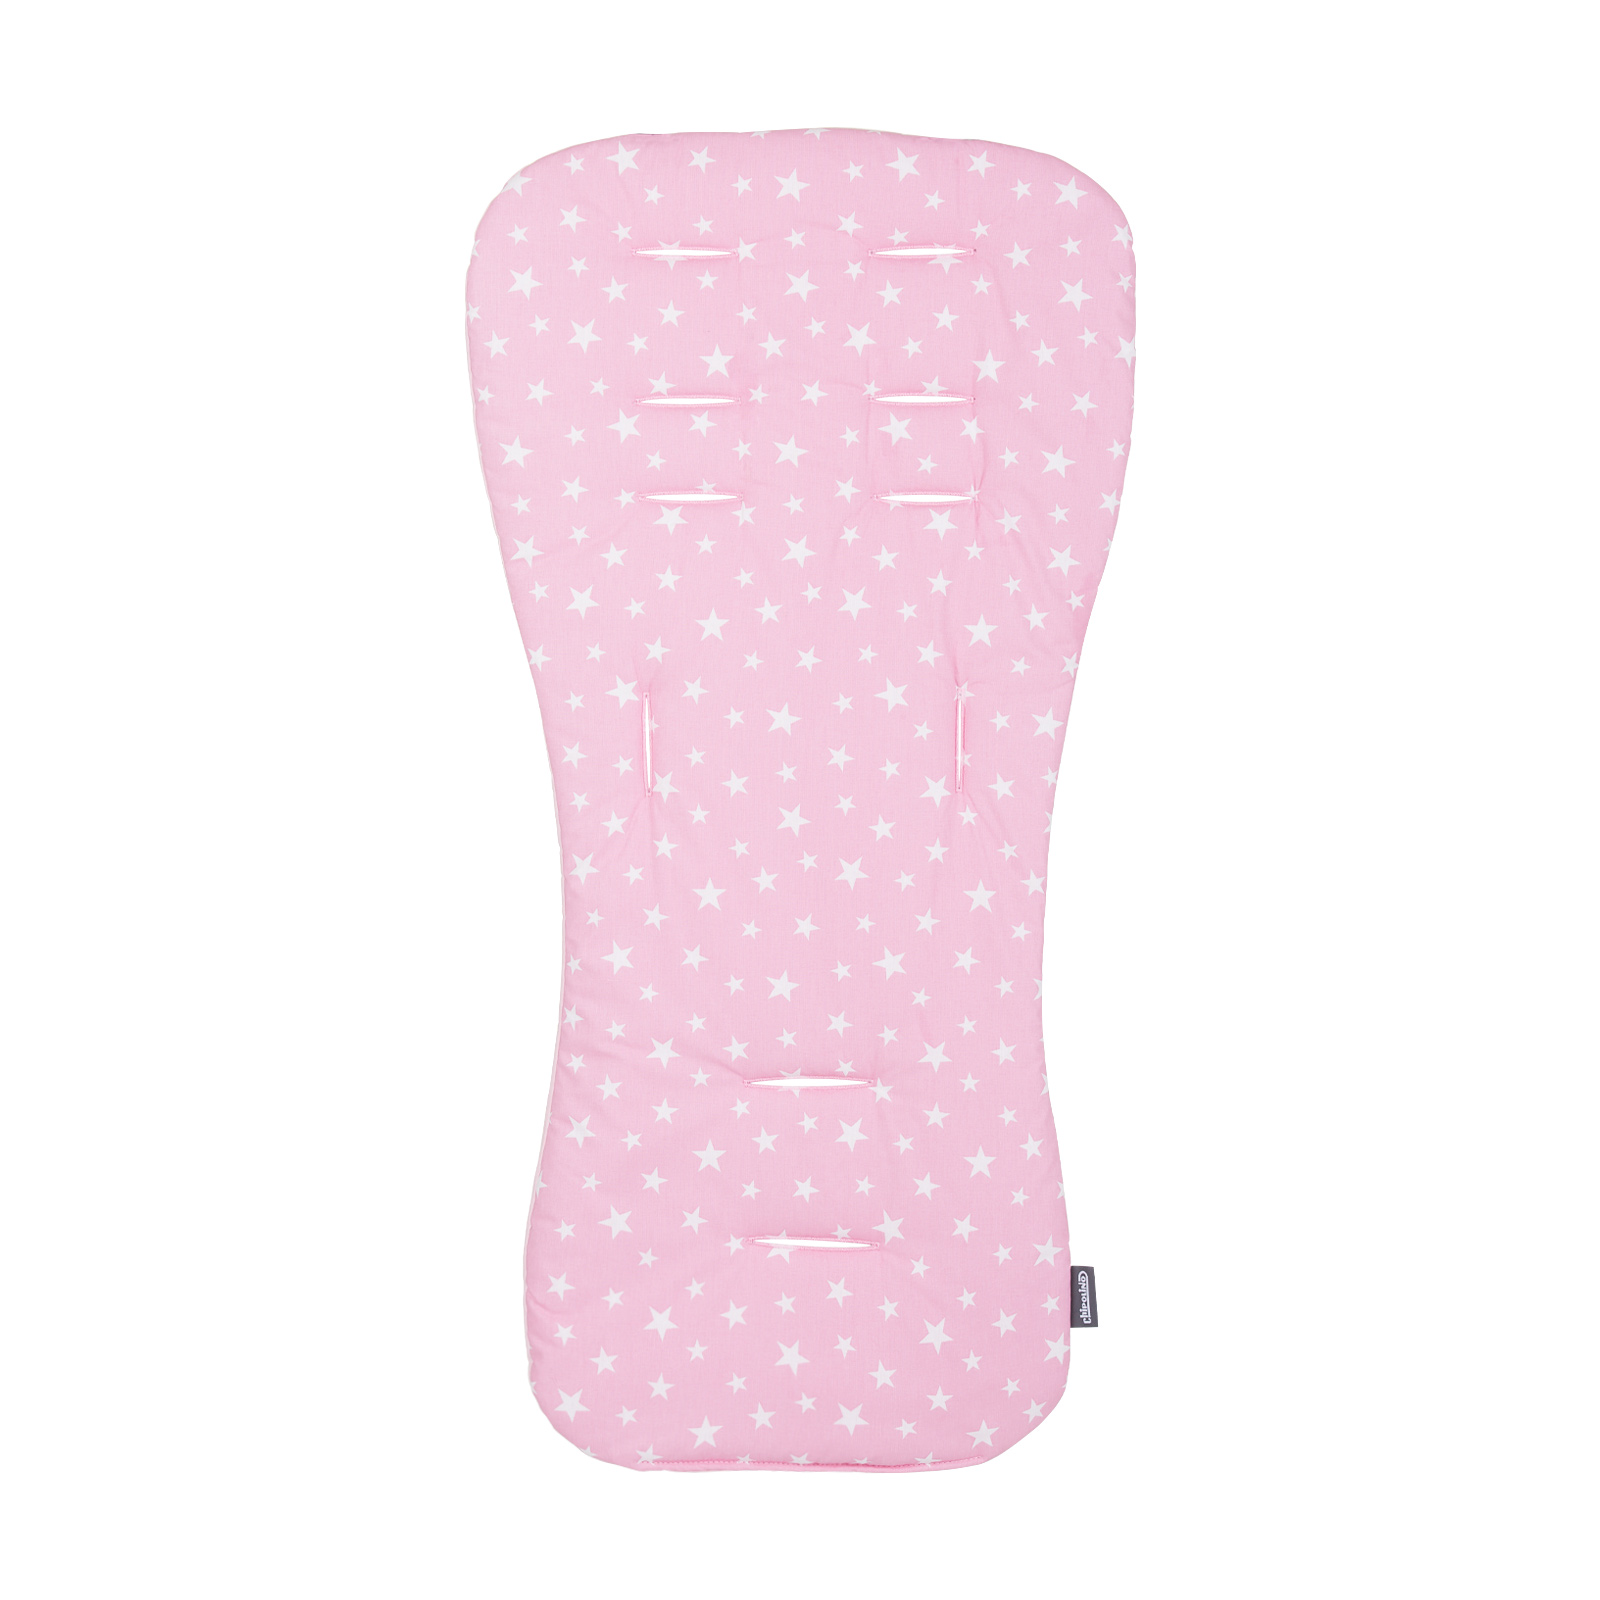 Chipolino Soft pad for stroller pink/pink stars VVPAD02402PINK